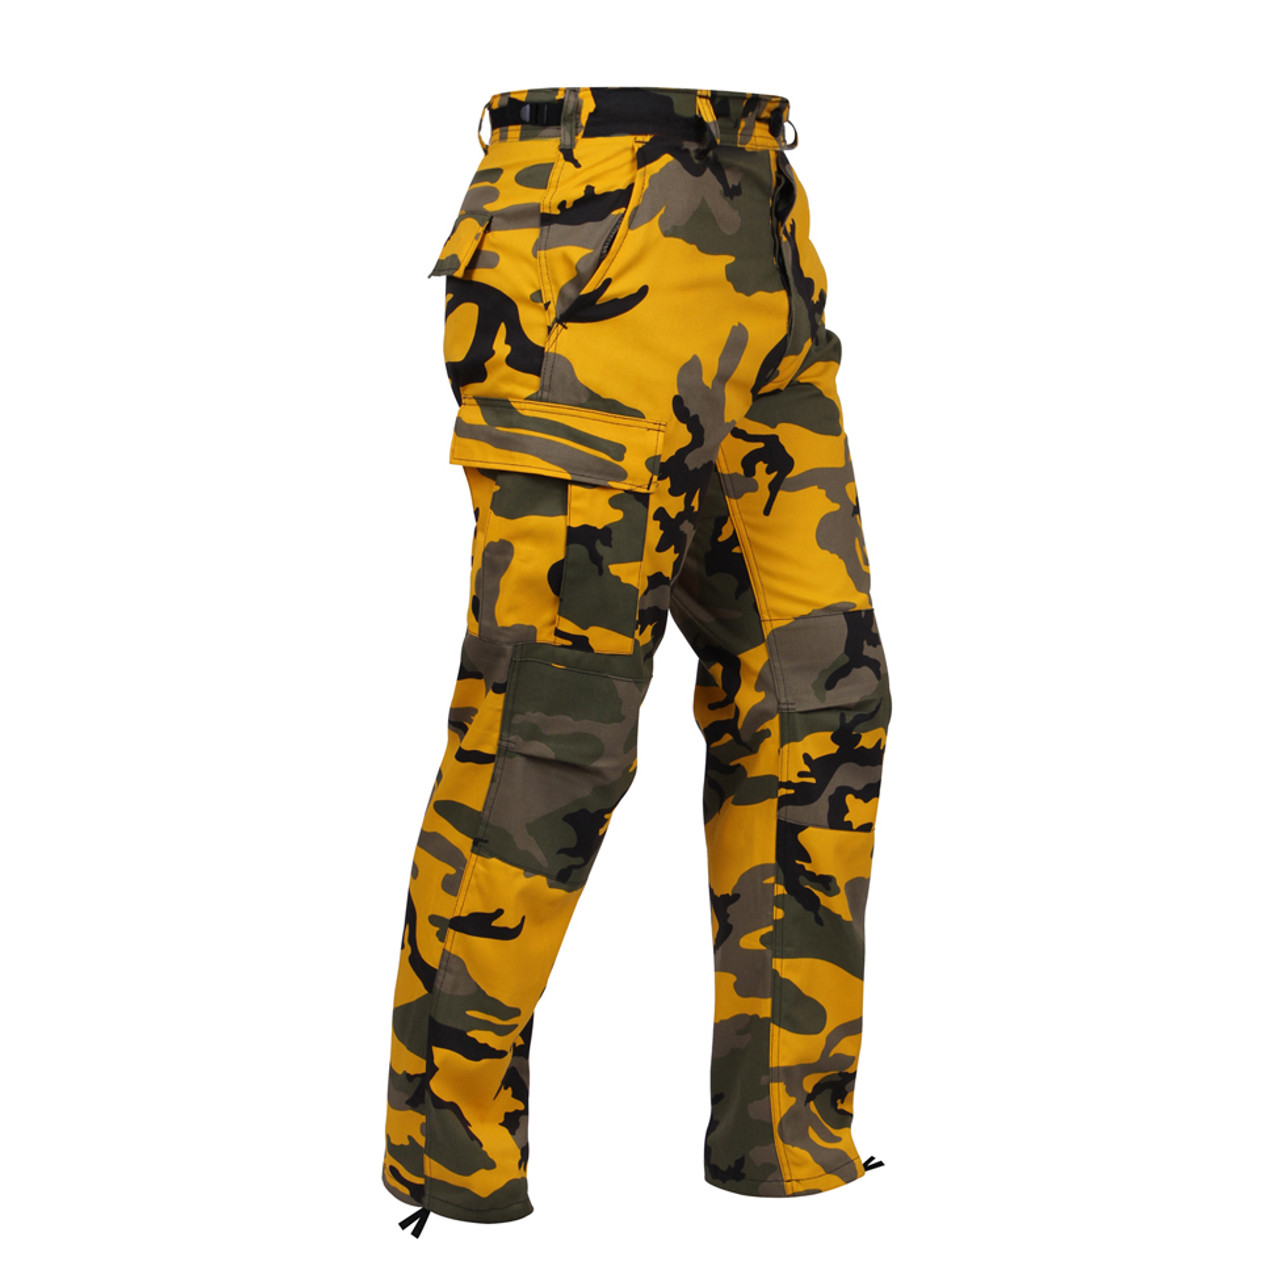 Shop Stinger Yellow Camo BDU Pants - Fatigues Army Navy Gear